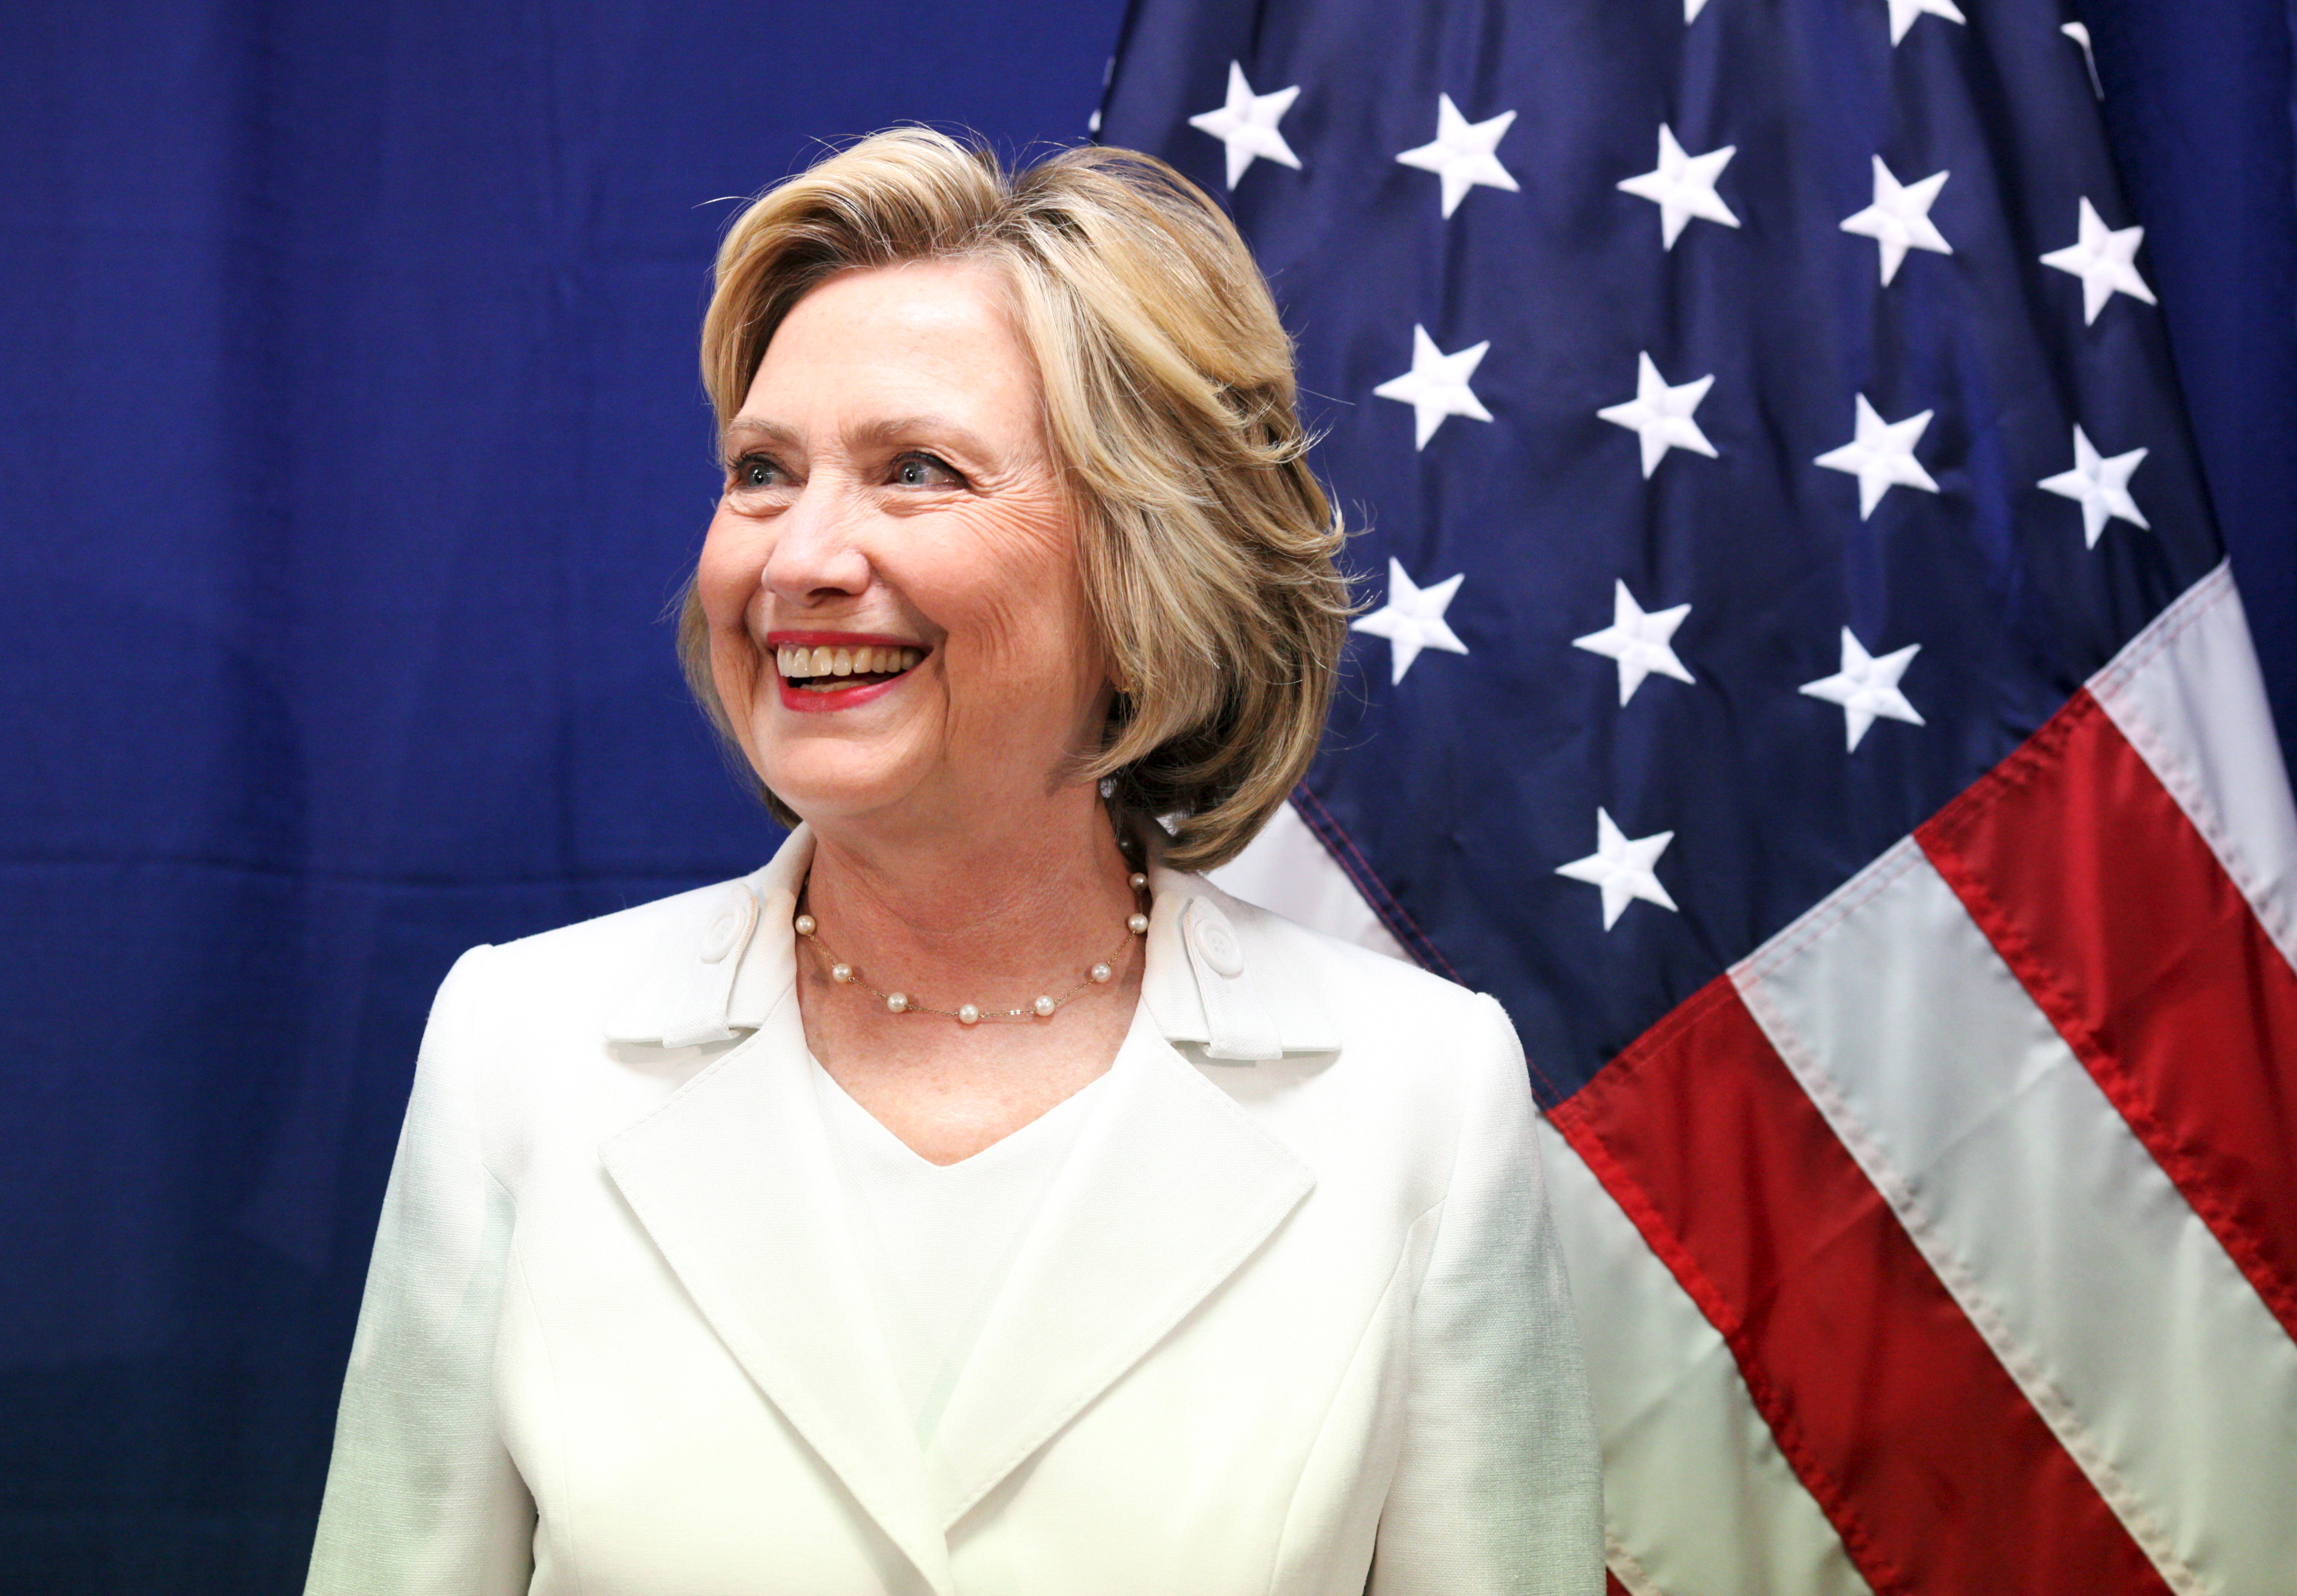 Clinton says U.S. presidential election an 'alternative reality'